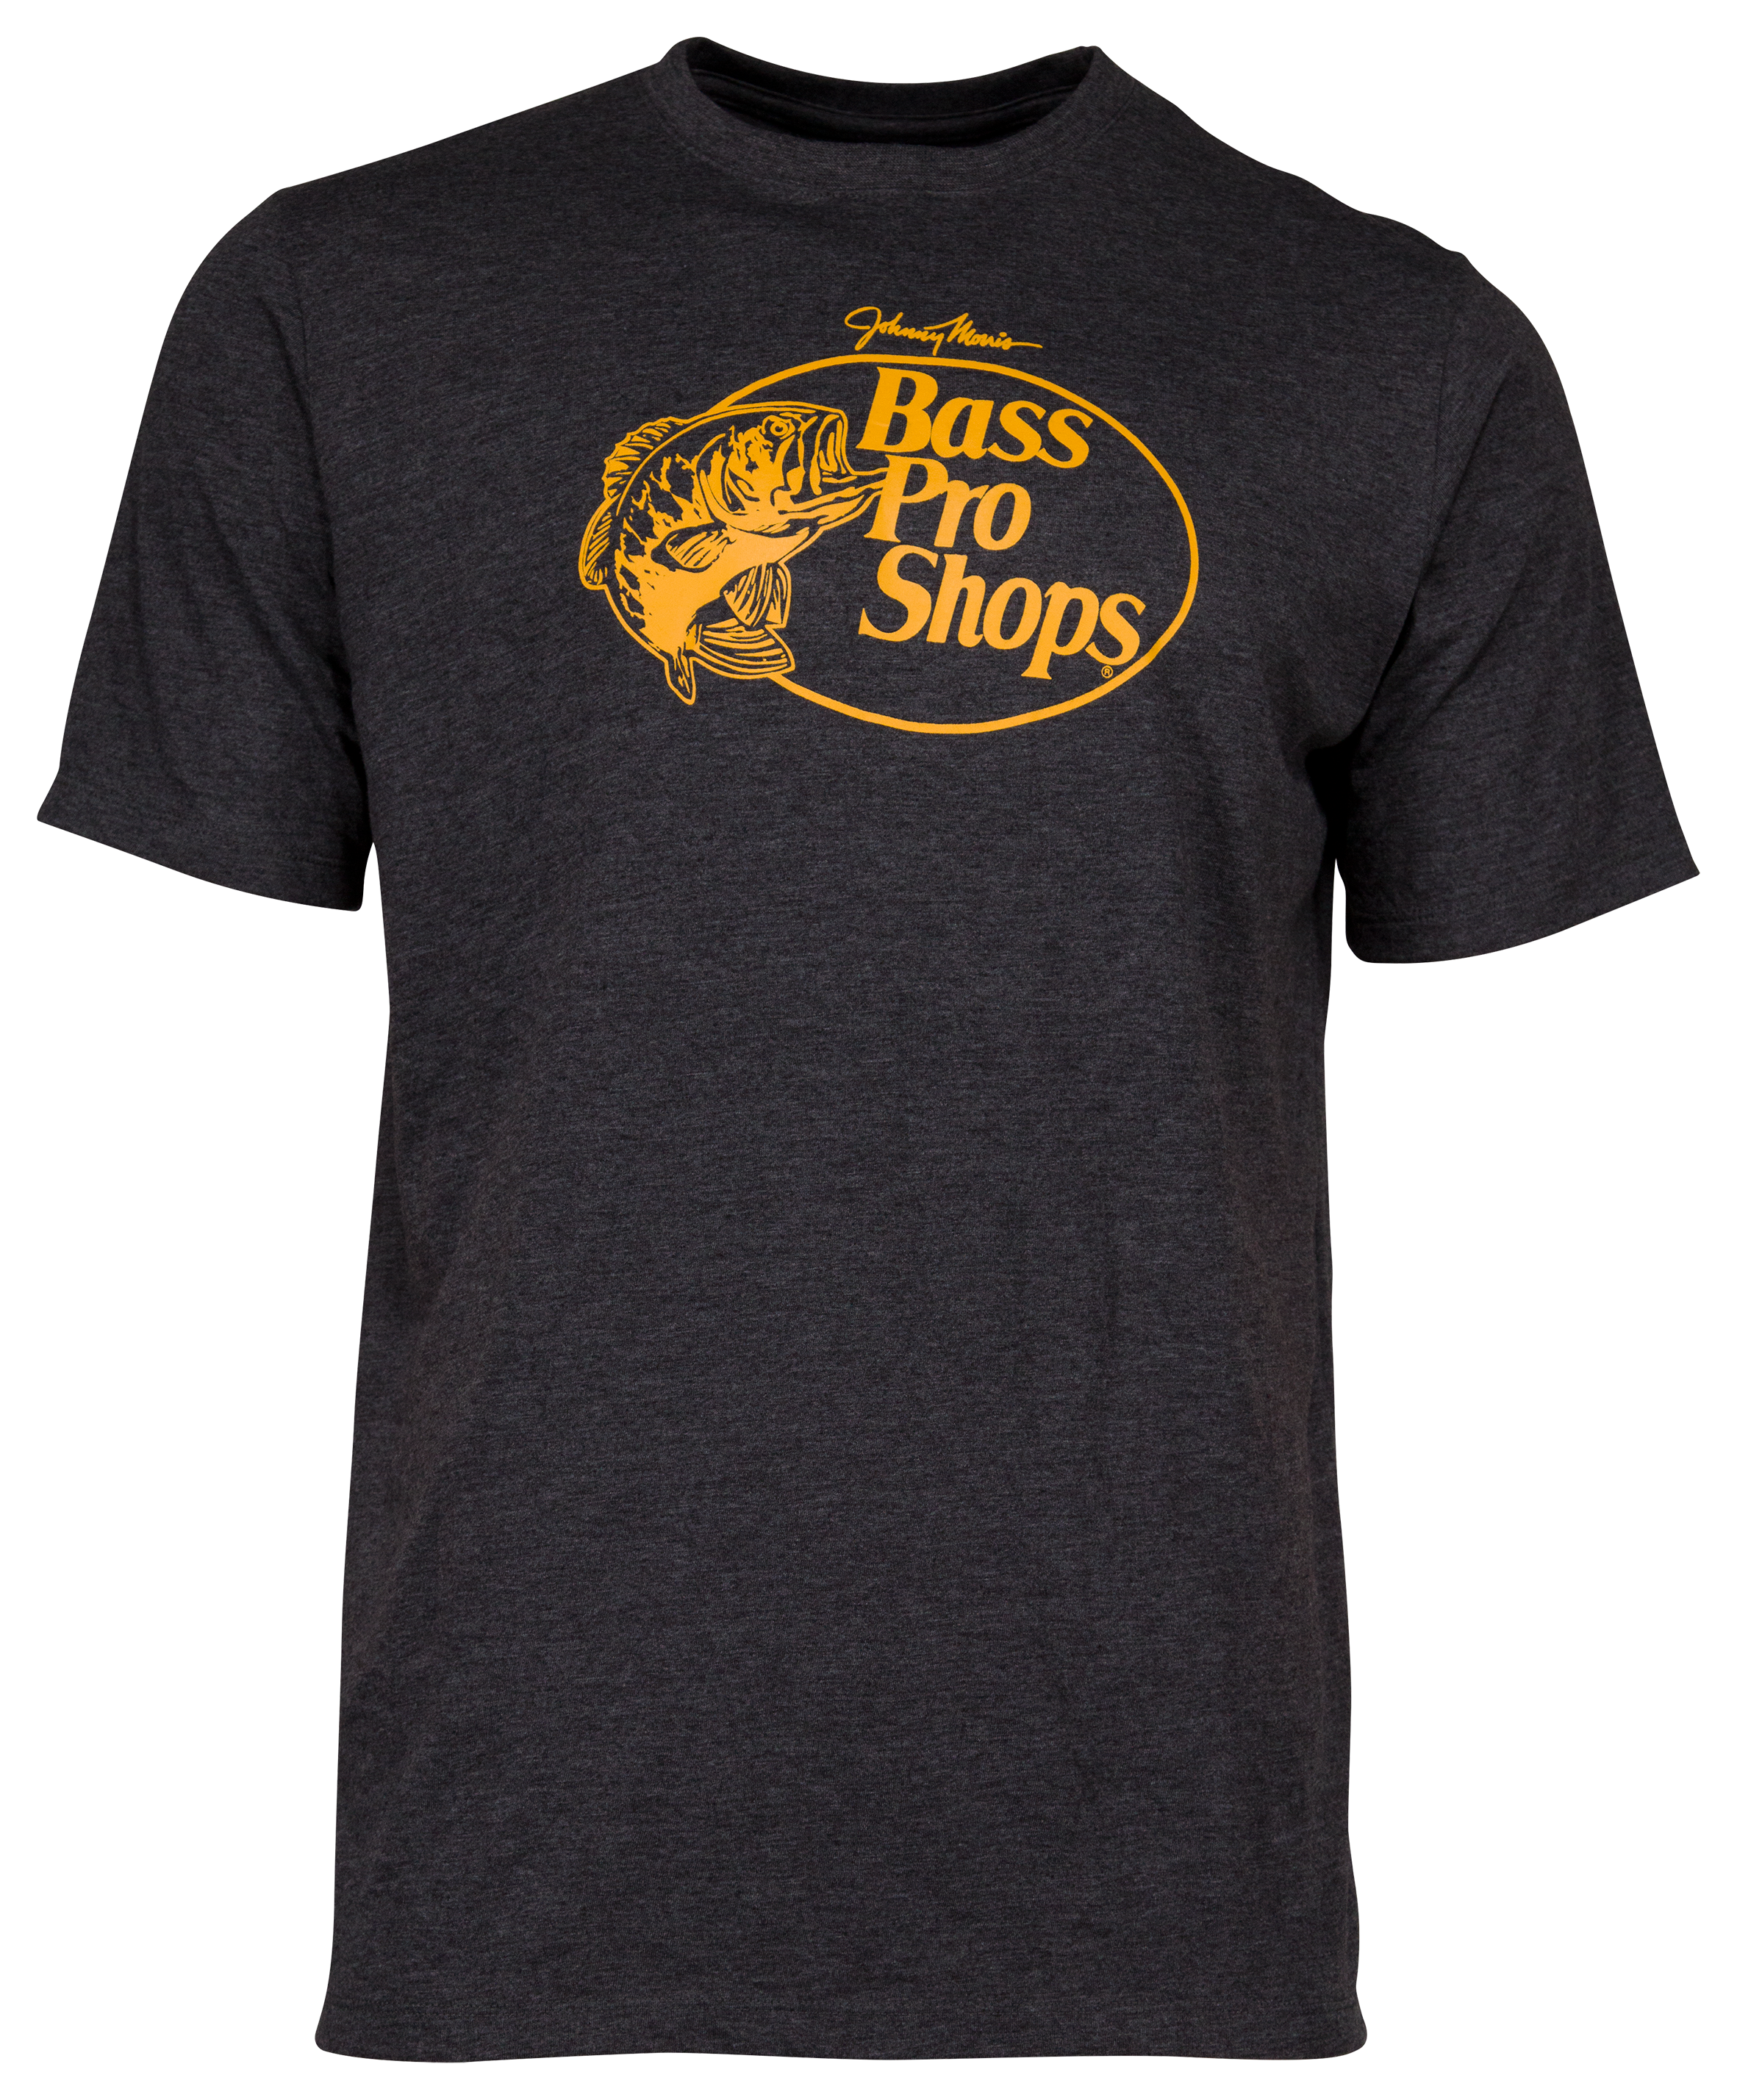 Bass Pro Shops Tri-Blend Logo Short-Sleeve T-Shirt for Men - Heather Gray - M